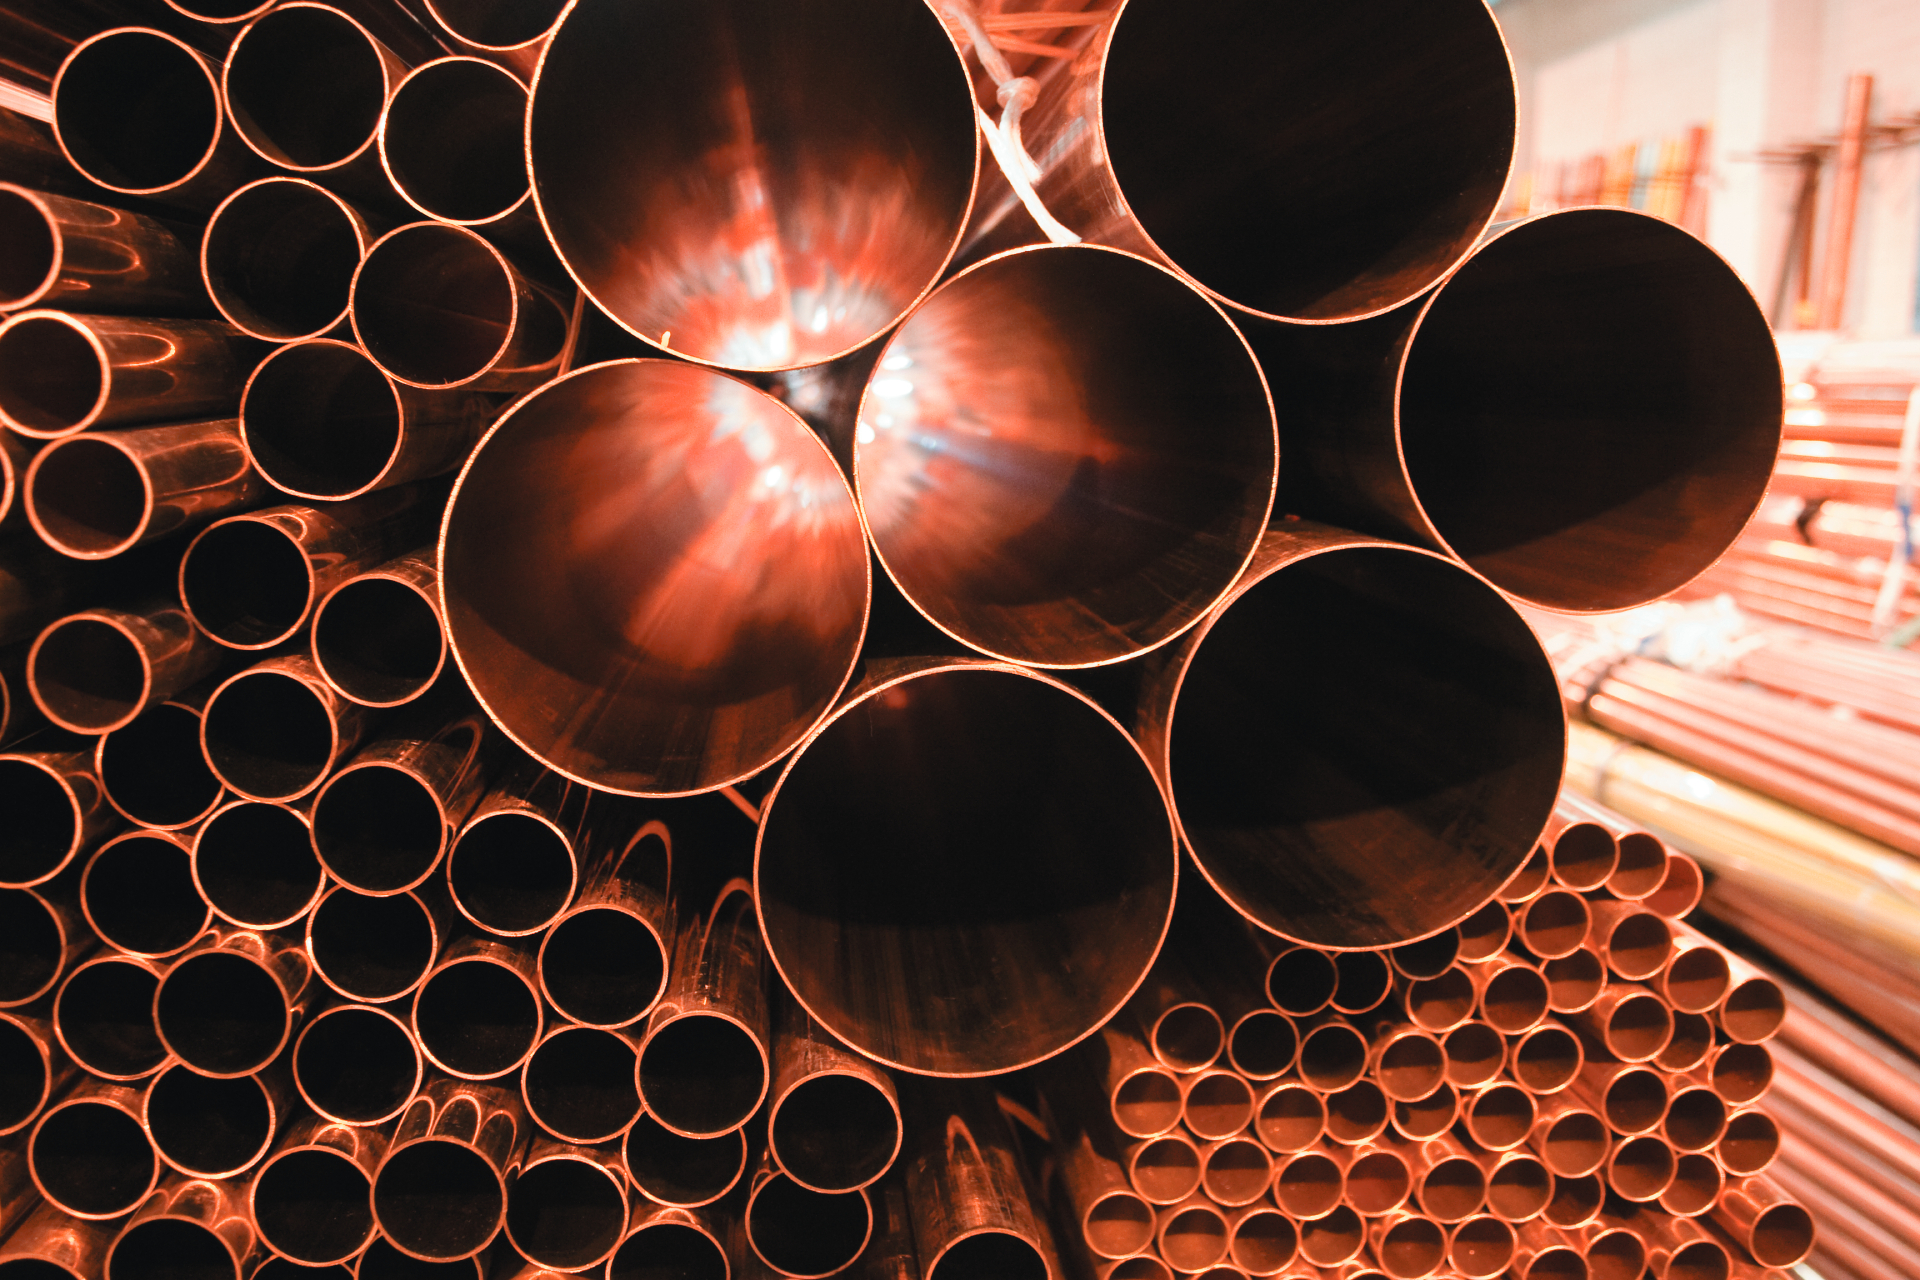 Copper tubes